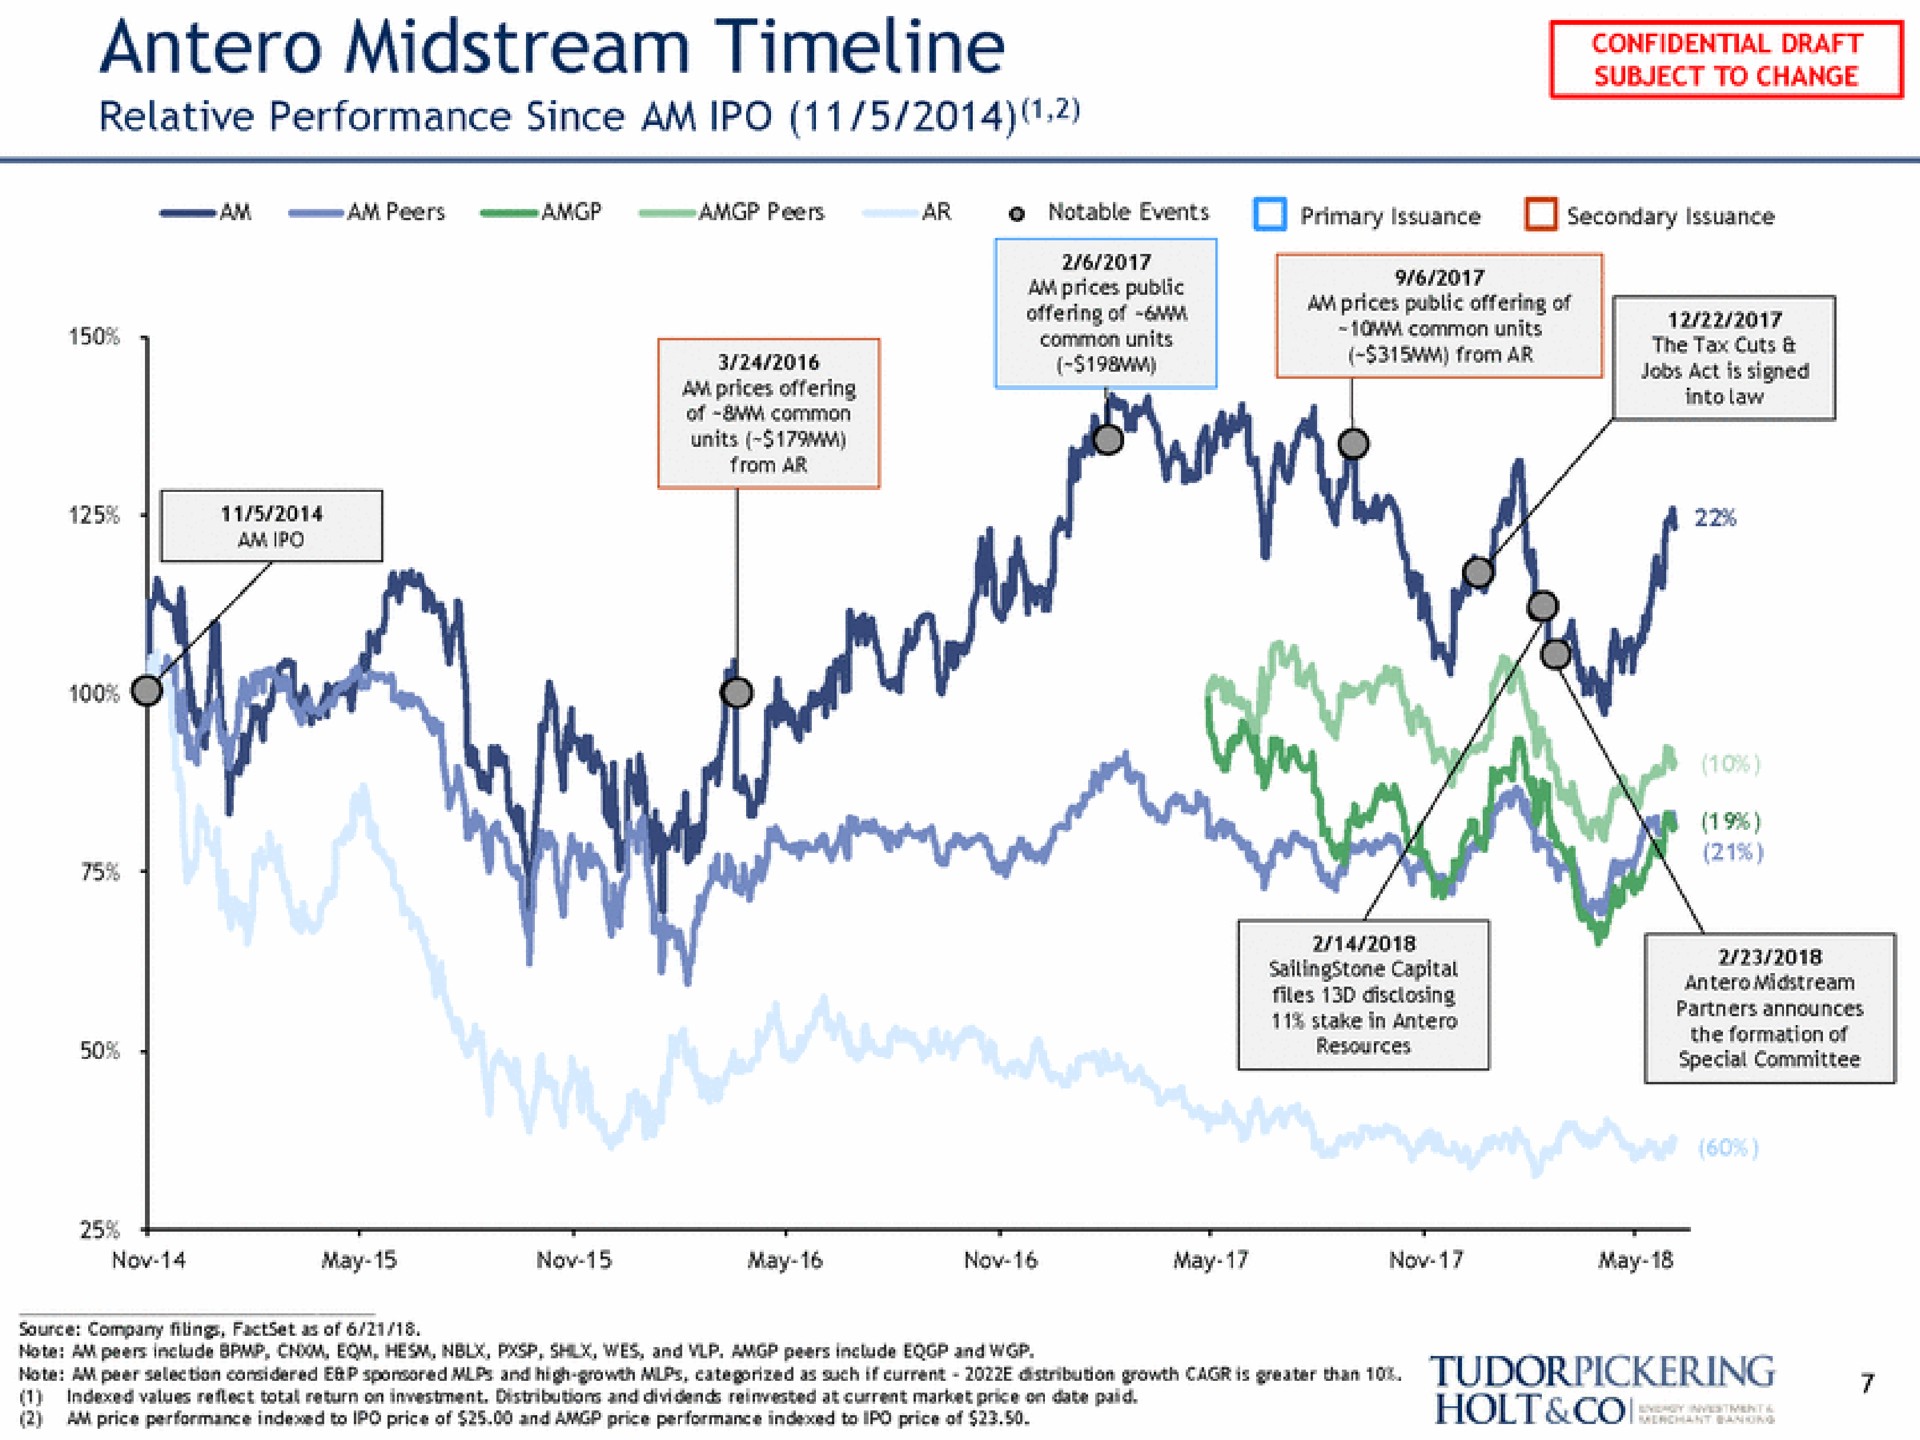 midstream relative performance since am | Tudor, Pickering, Holt & Co